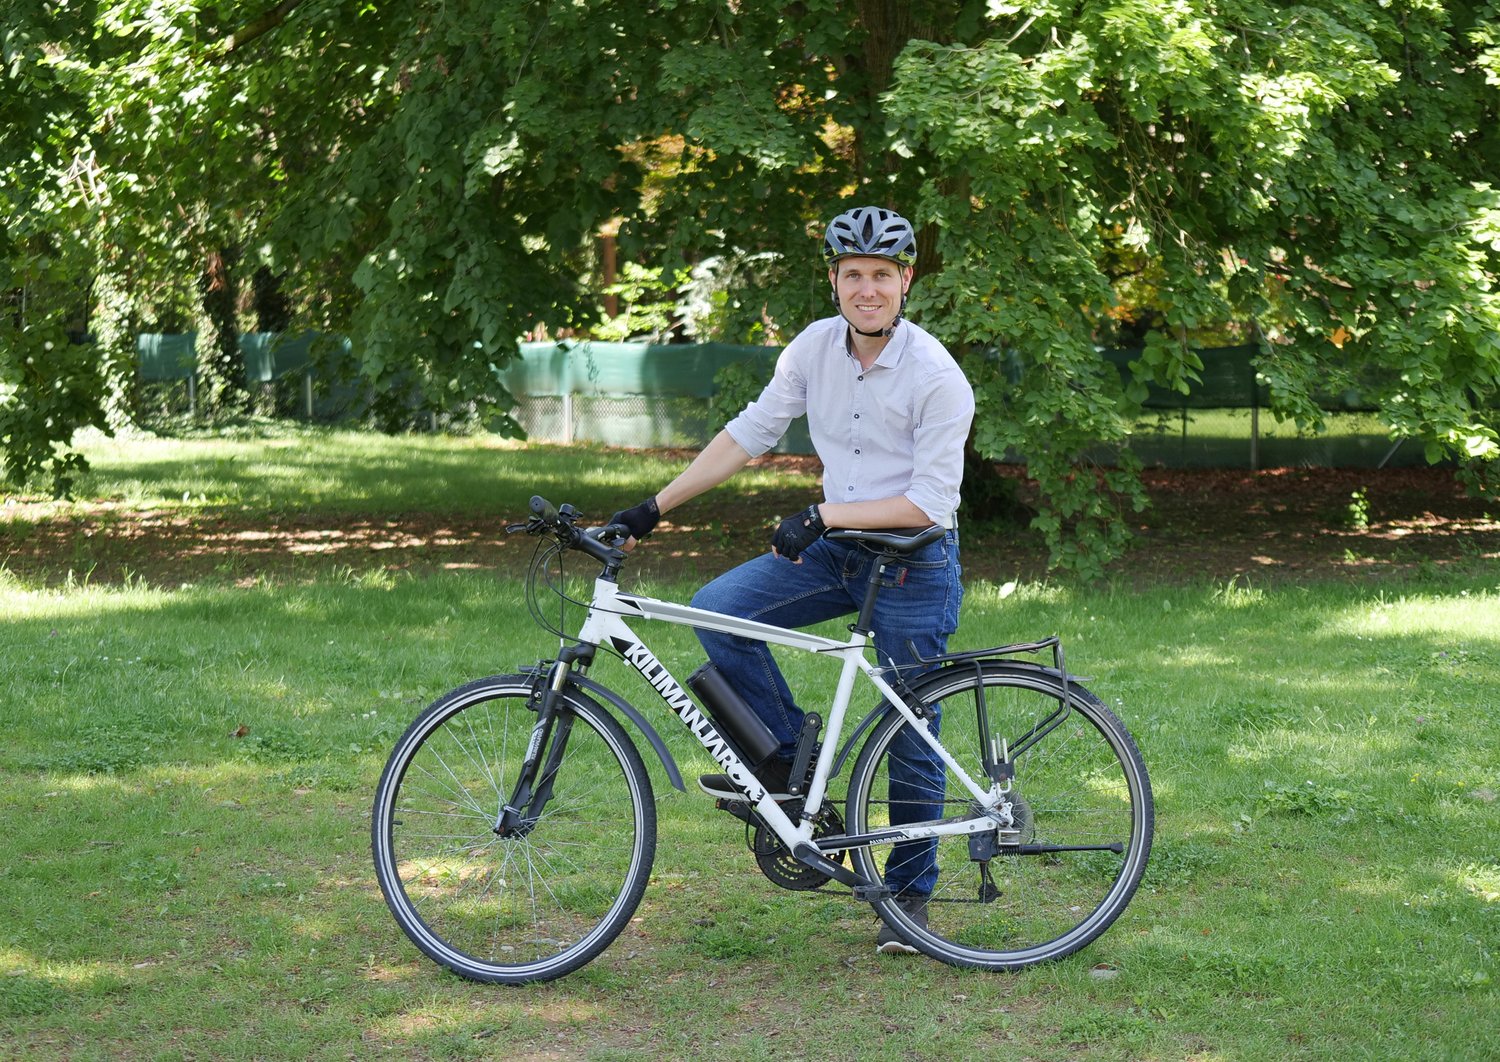 Herbert Hackl in bike clothing, leaning on his bike